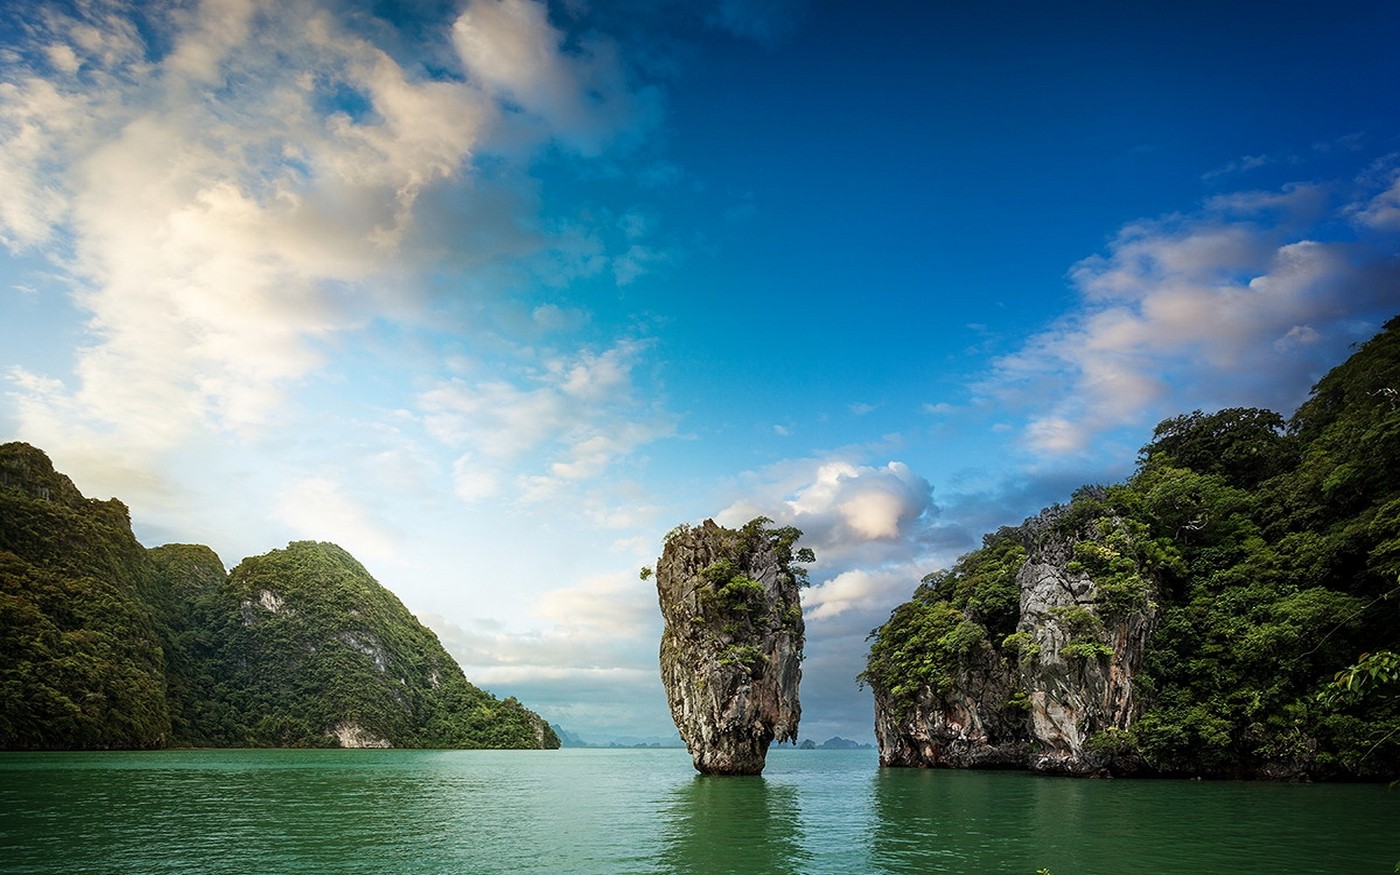 Landscape Nature Sea Island Bay Trees Shrubs Limestone Rock Tropical Clouds Thailand 1400x875